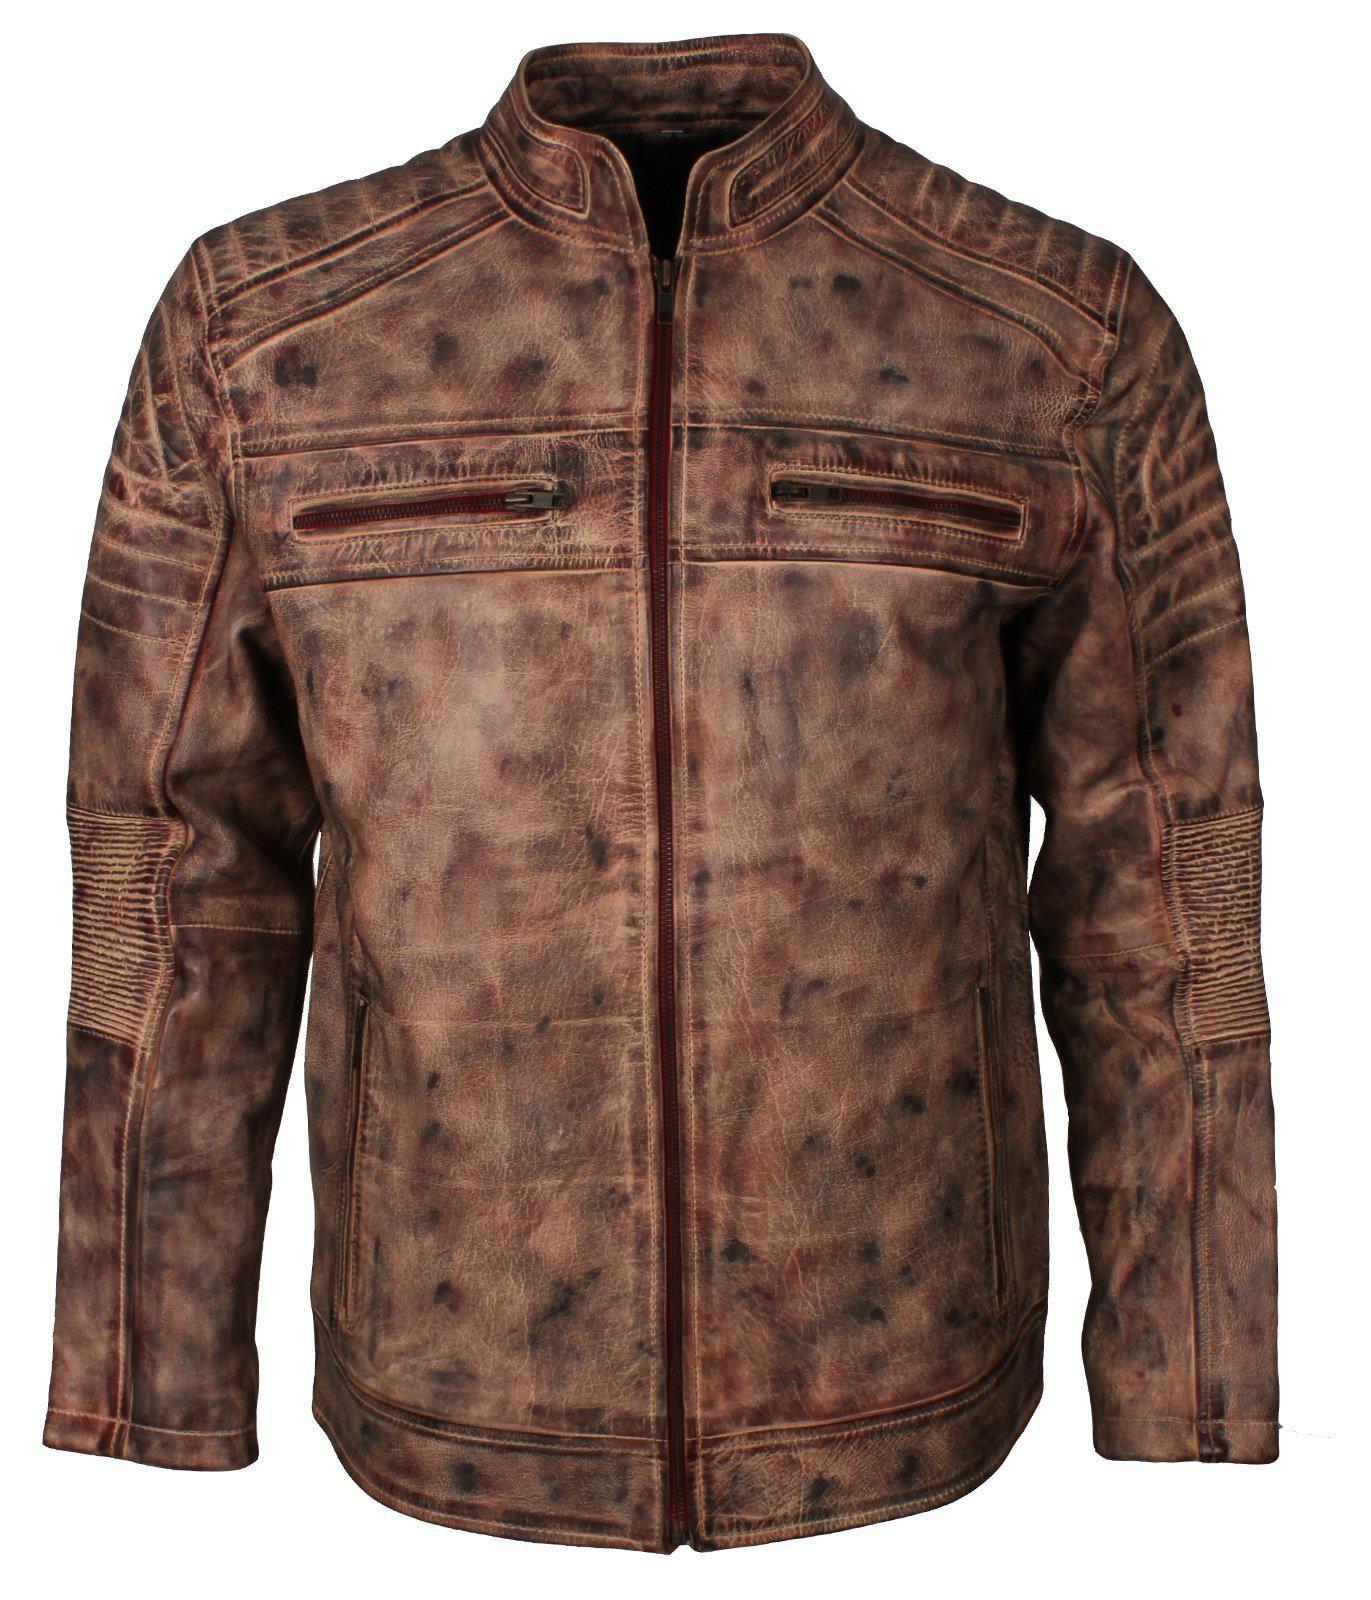 Tan Waxed Leather Jacket